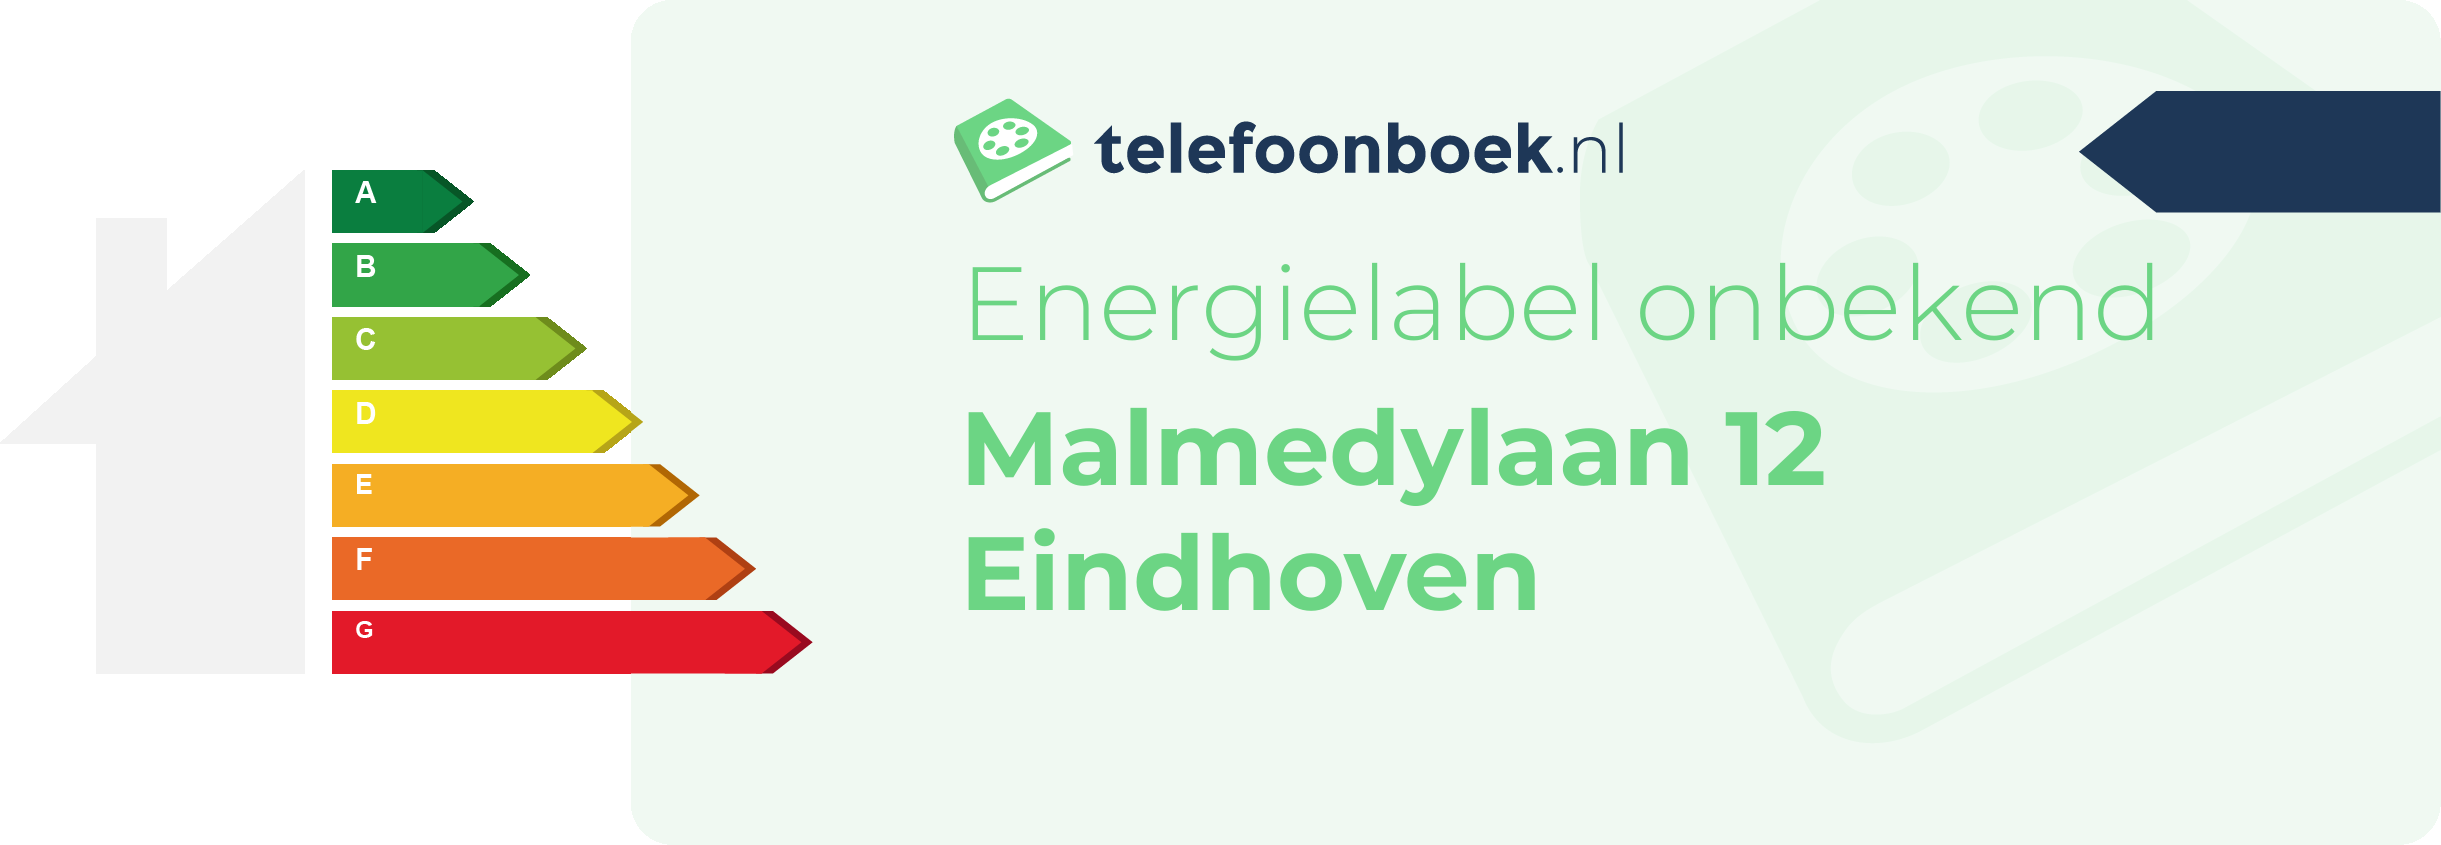 Energielabel Malmedylaan 12 Eindhoven